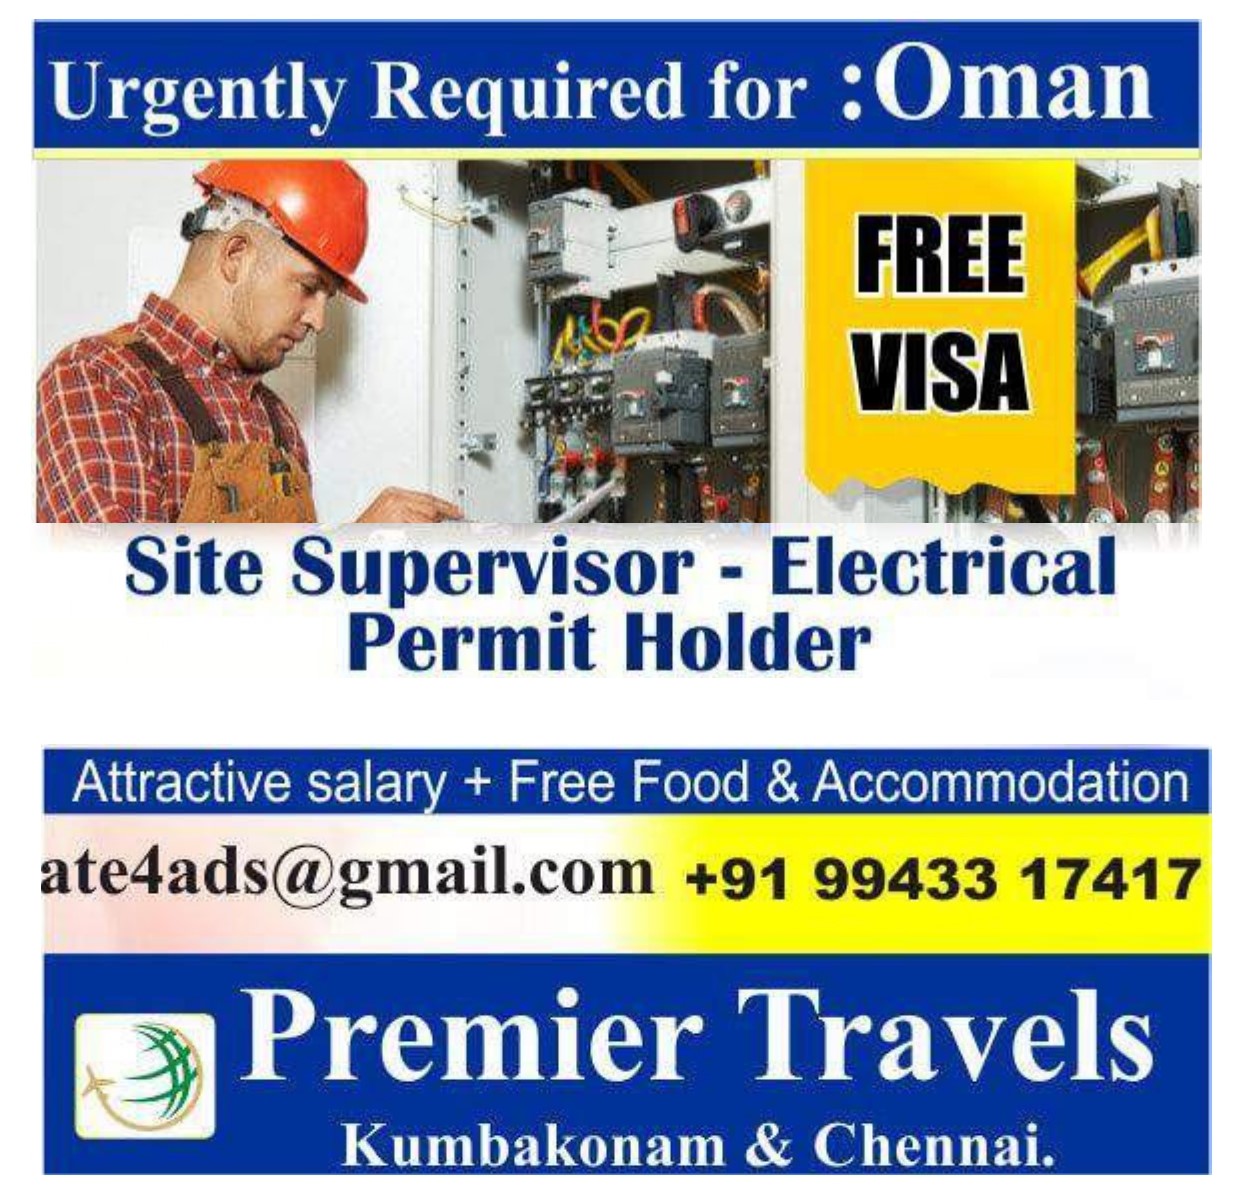 Free Visa for Oman